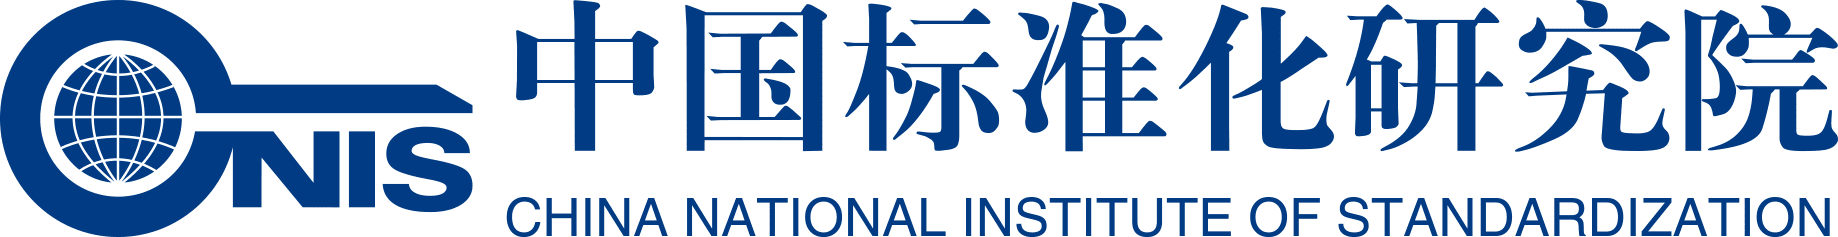  China National Institute of Standardization